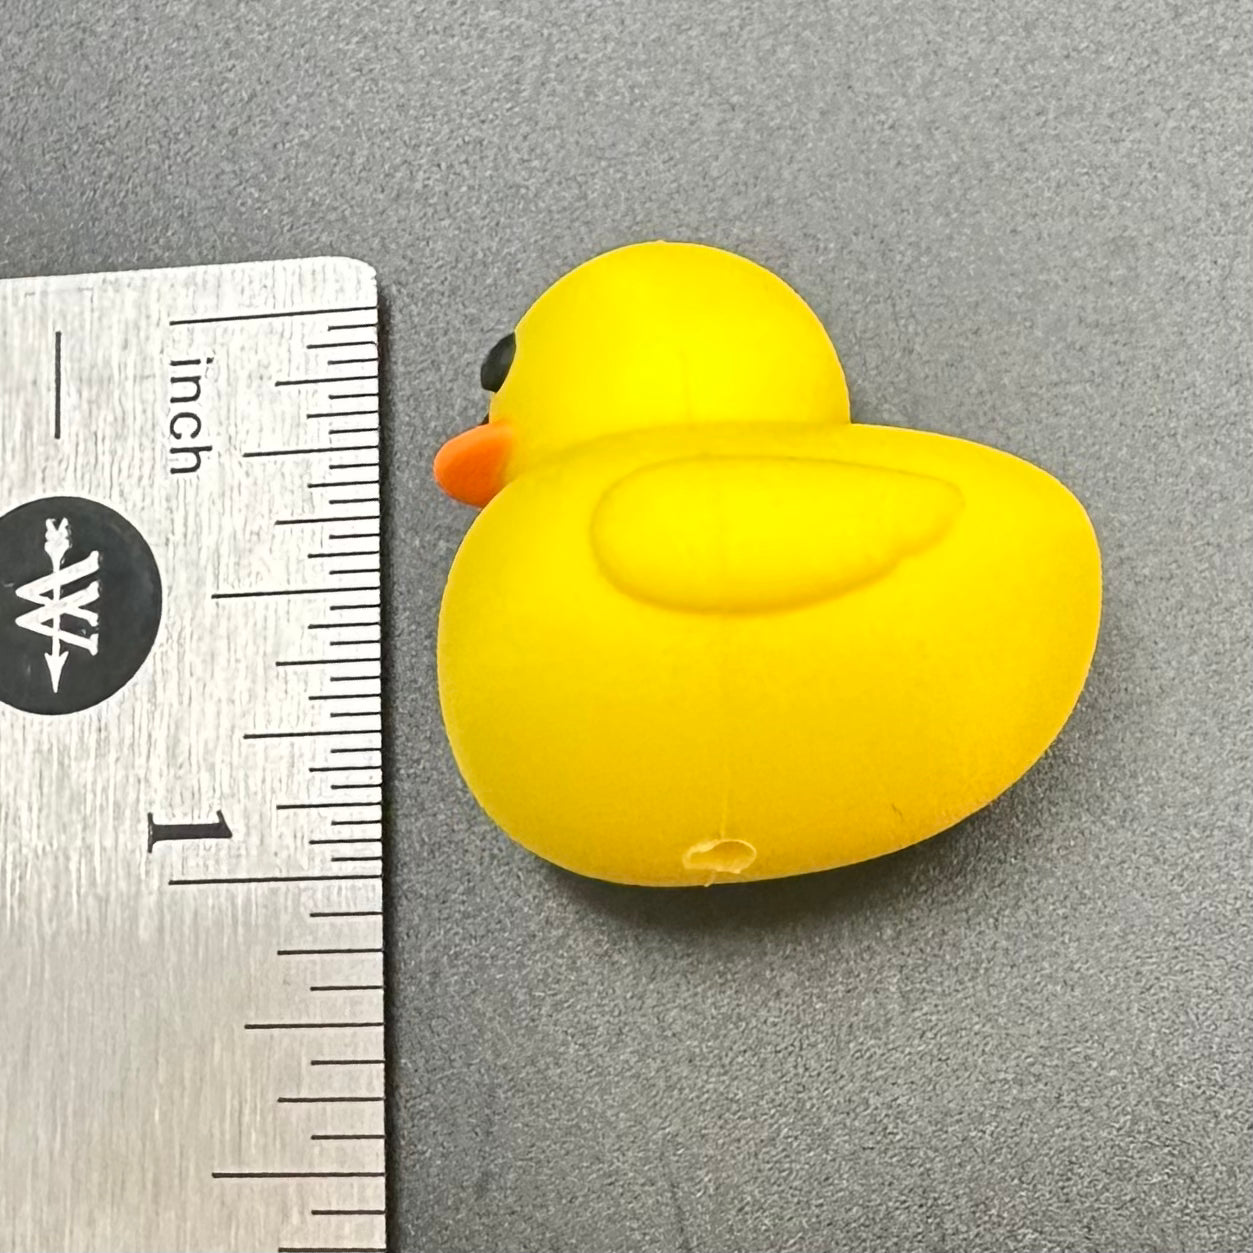 Focal Bead, Yellow Rubber Ducky